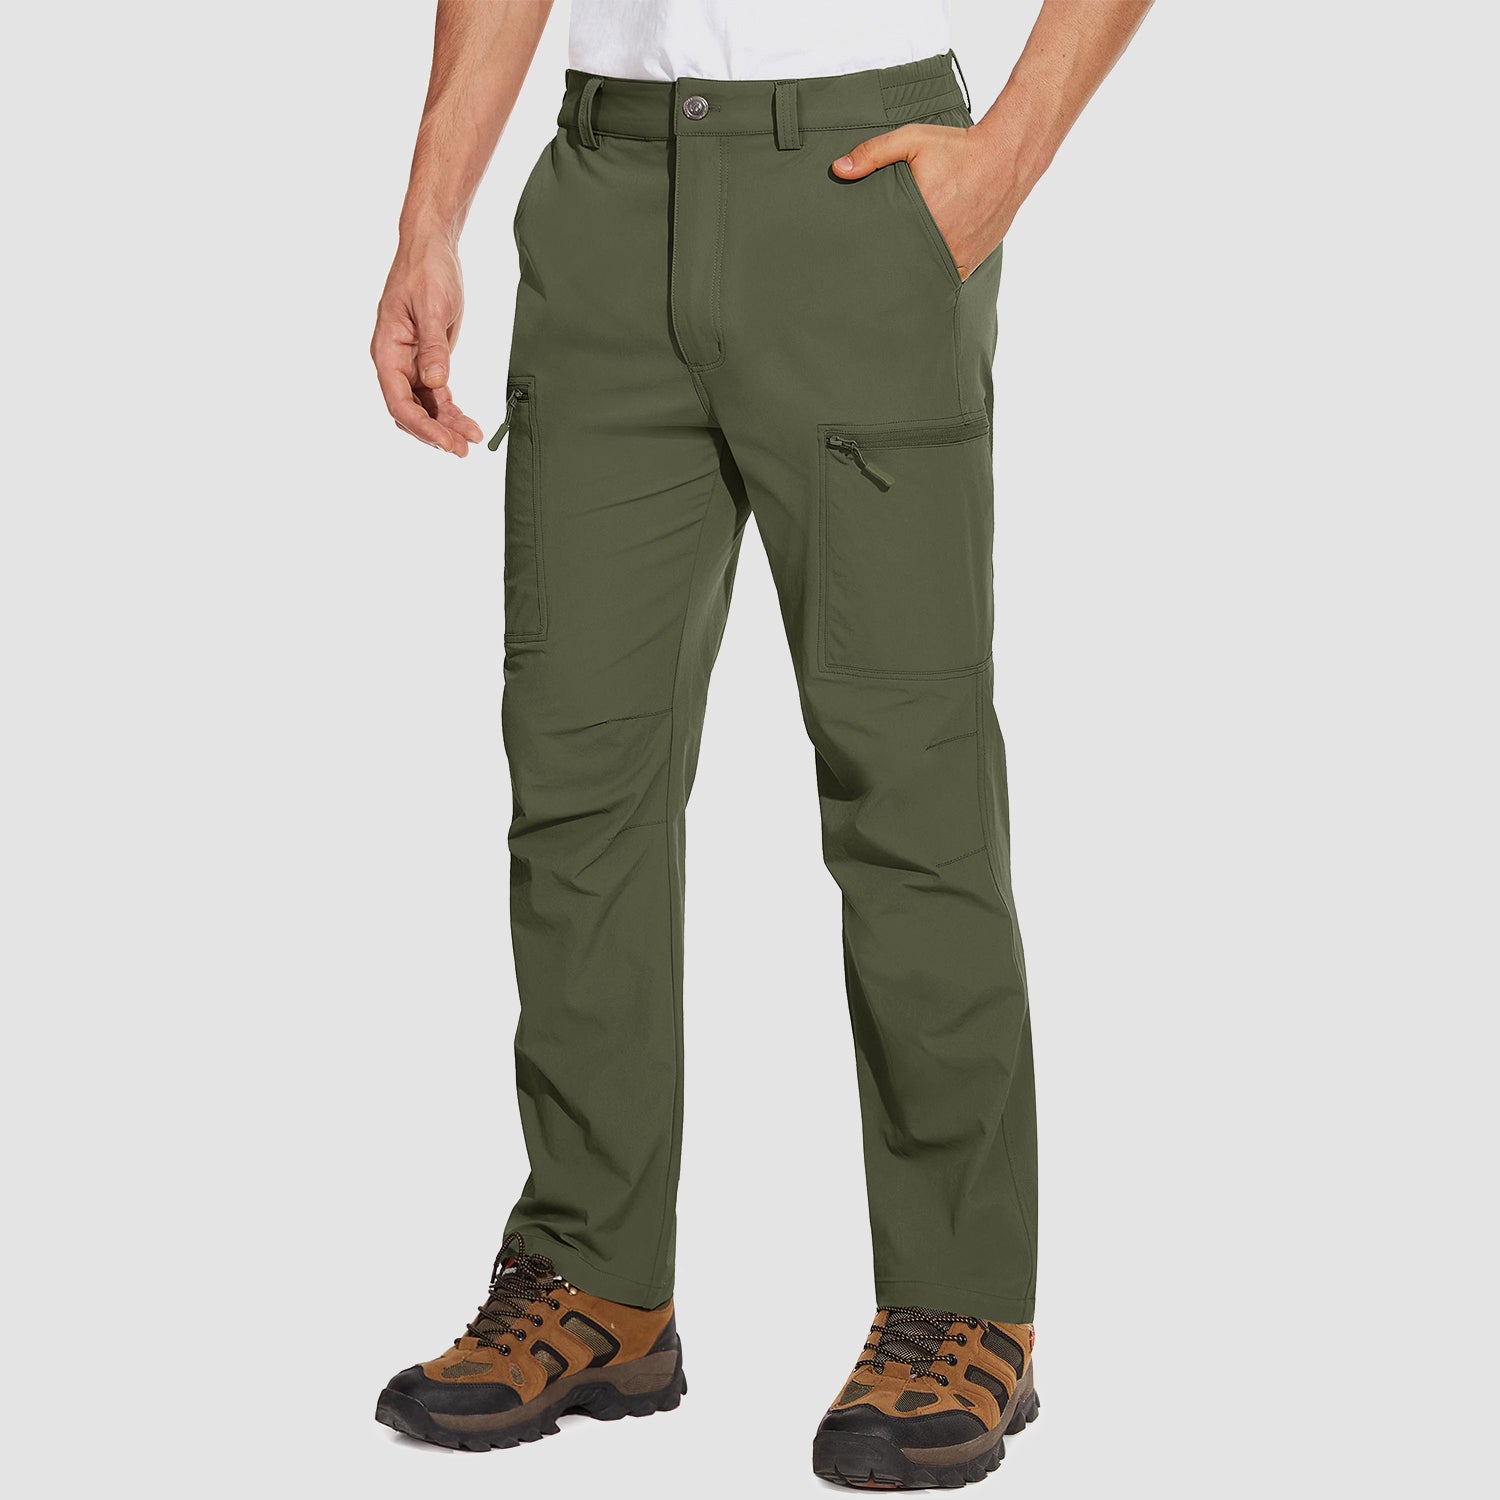 MAGCOMSEN Men's Pants Water Resistant Stretch Straight Leg Cargo Pant, Light Grey / 30